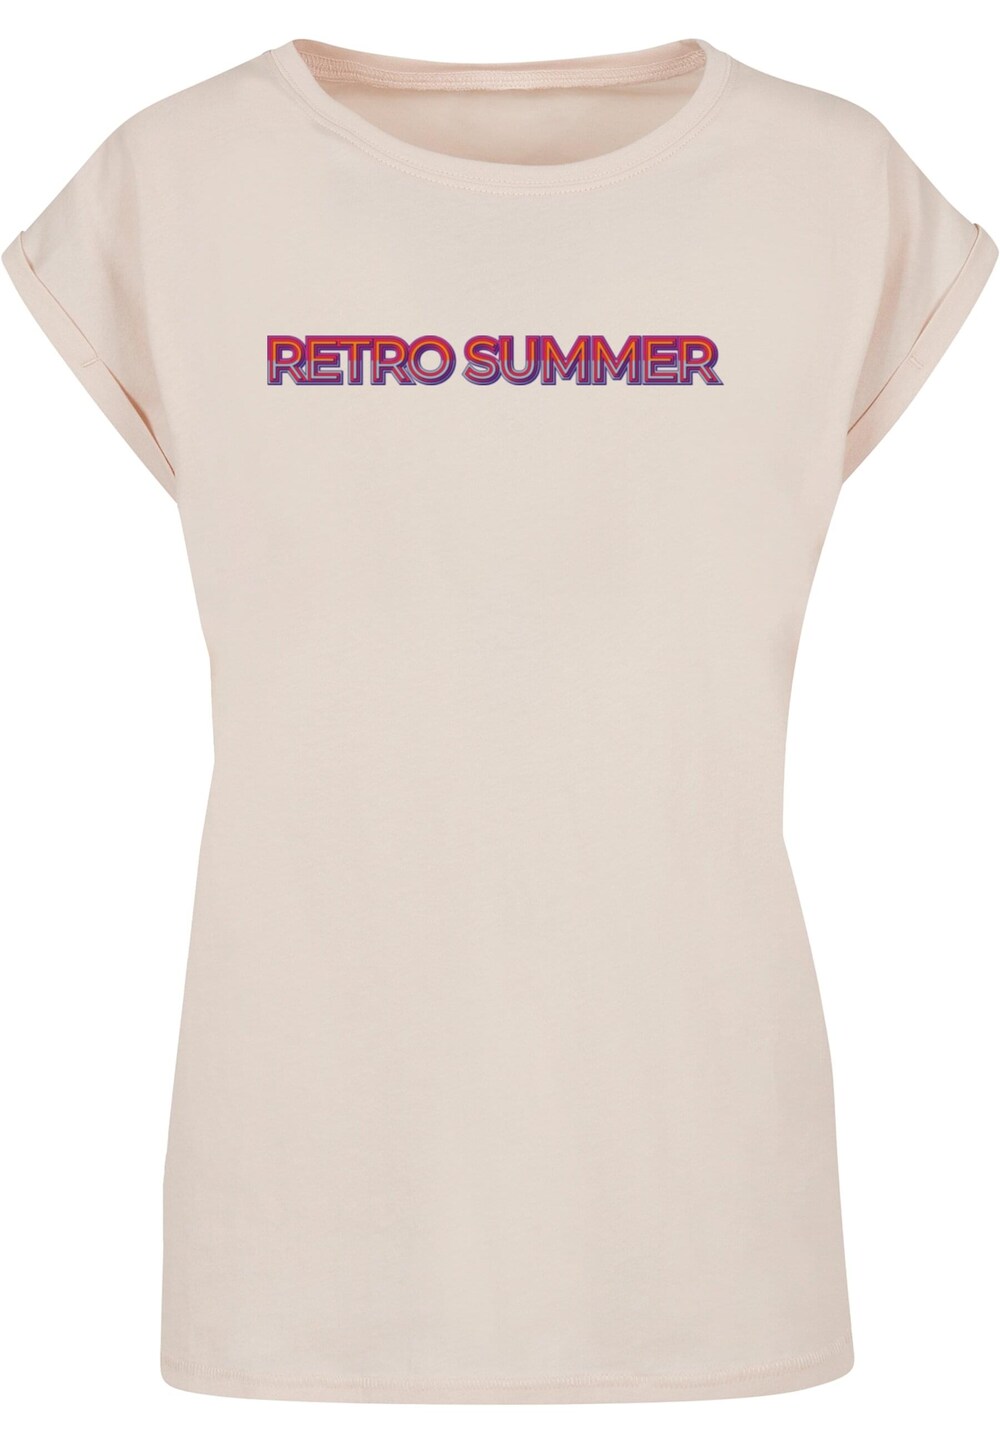 Рубашка Merchcode Summer Retro, белый